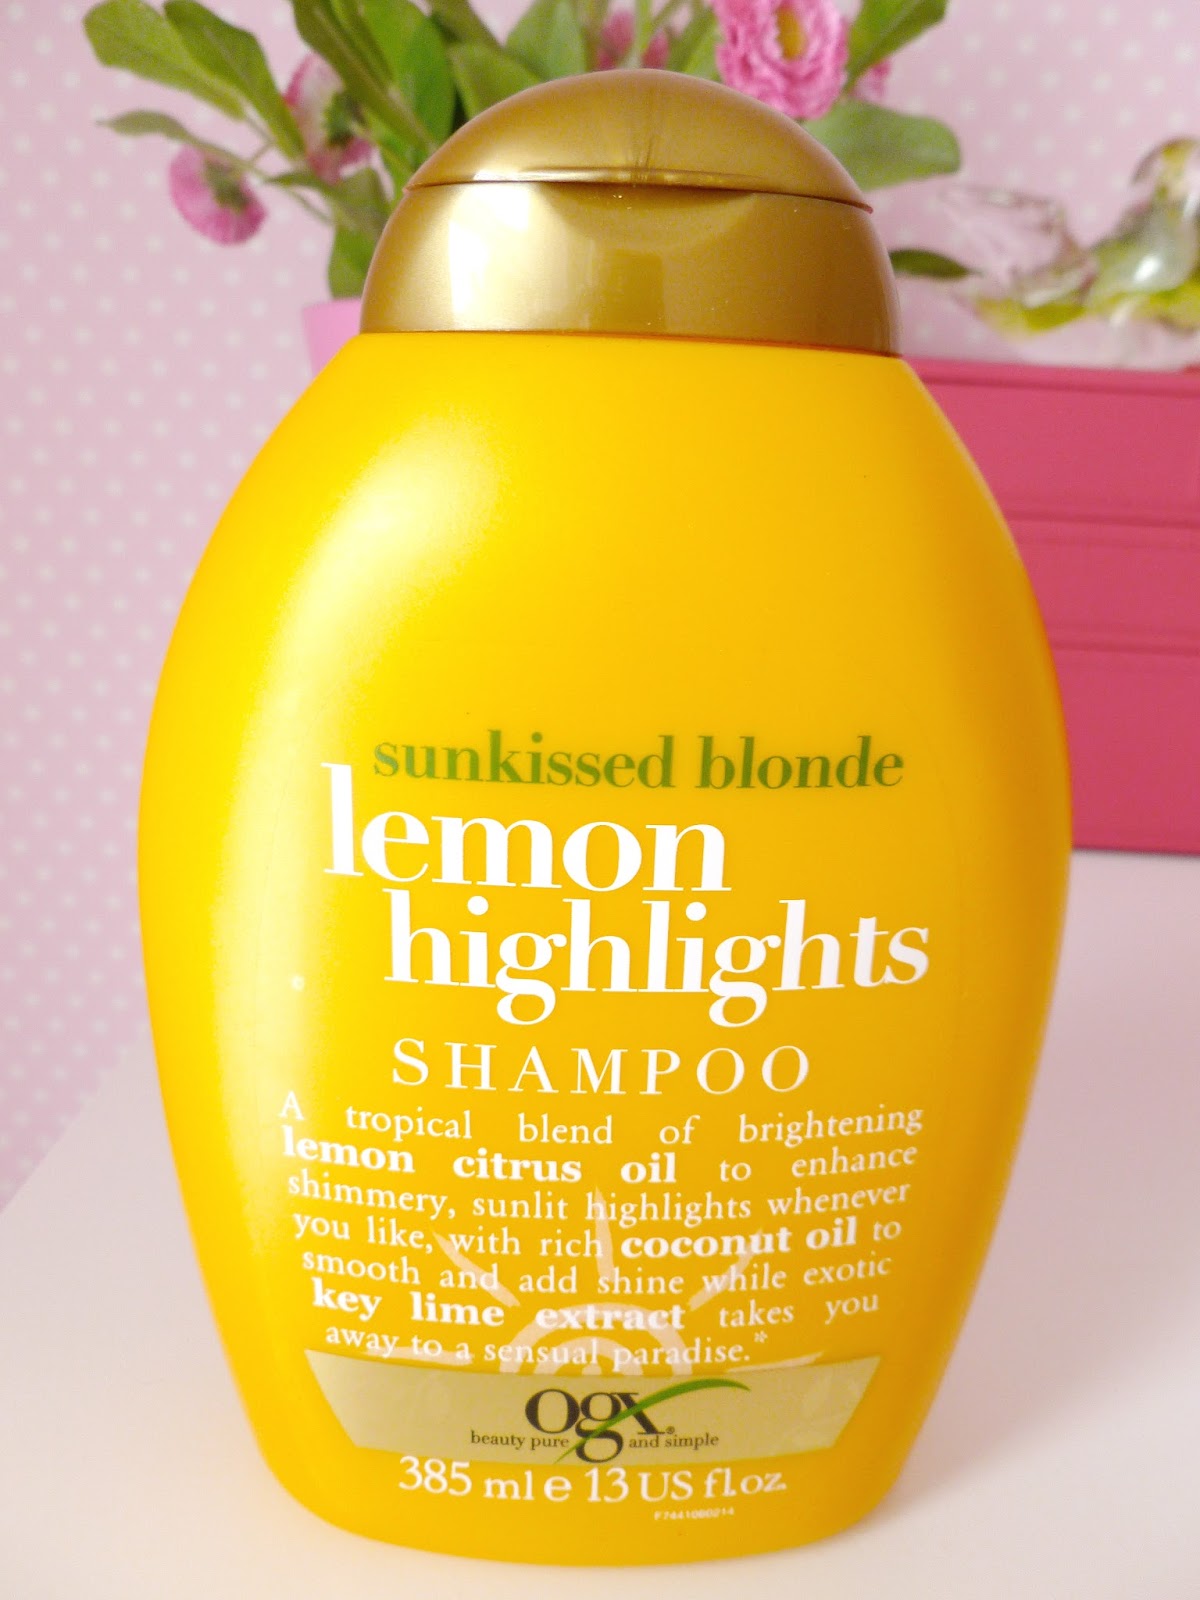 sjældenhed snap gæld OGX Shampoo - Review | Mammaful Zo: Beauty, Life, Plus Size Fashion & More